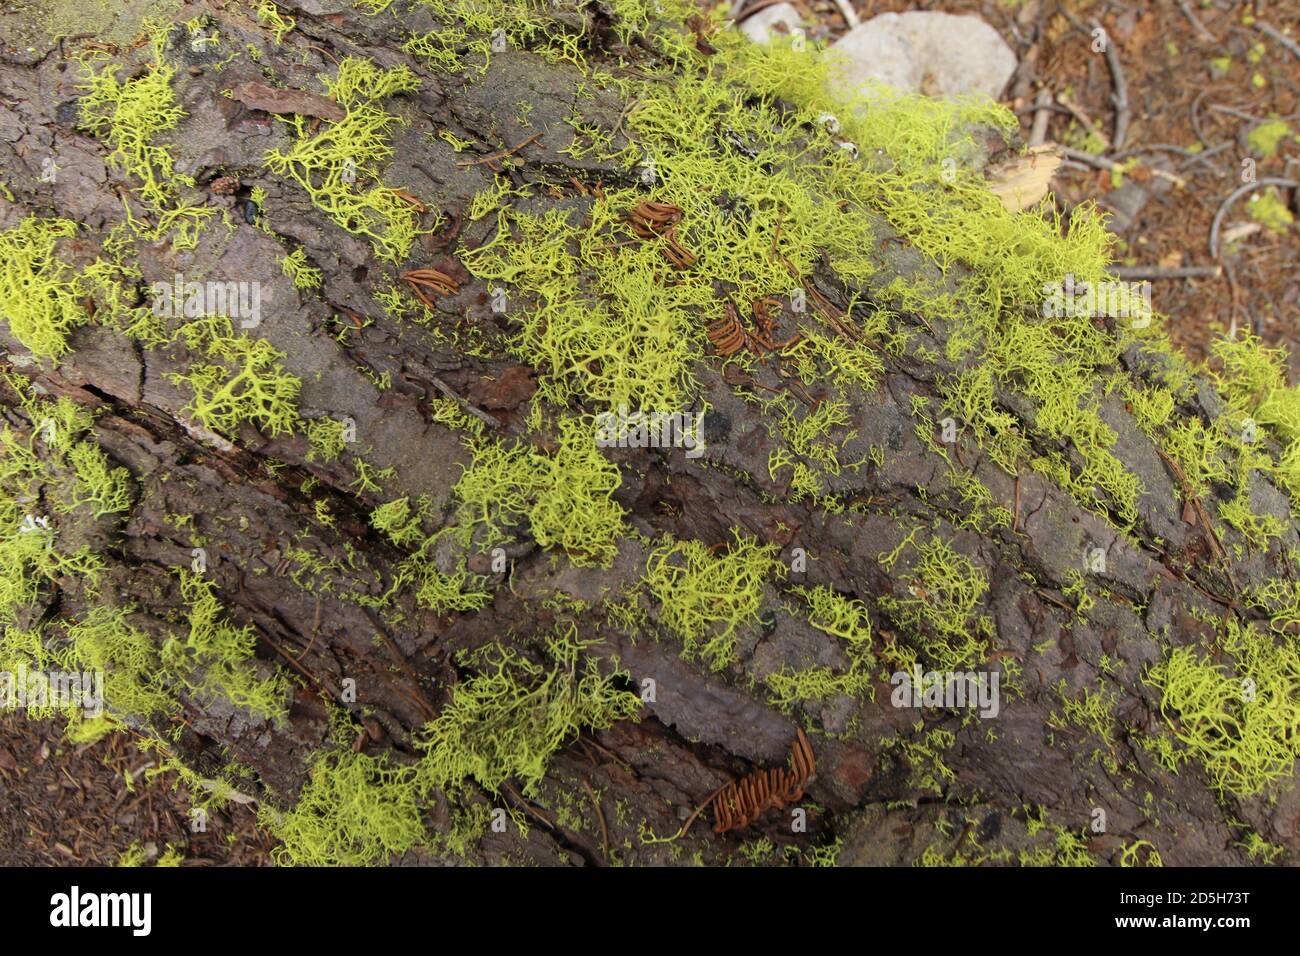 Green Herniarias growing on the ground Stock Photo